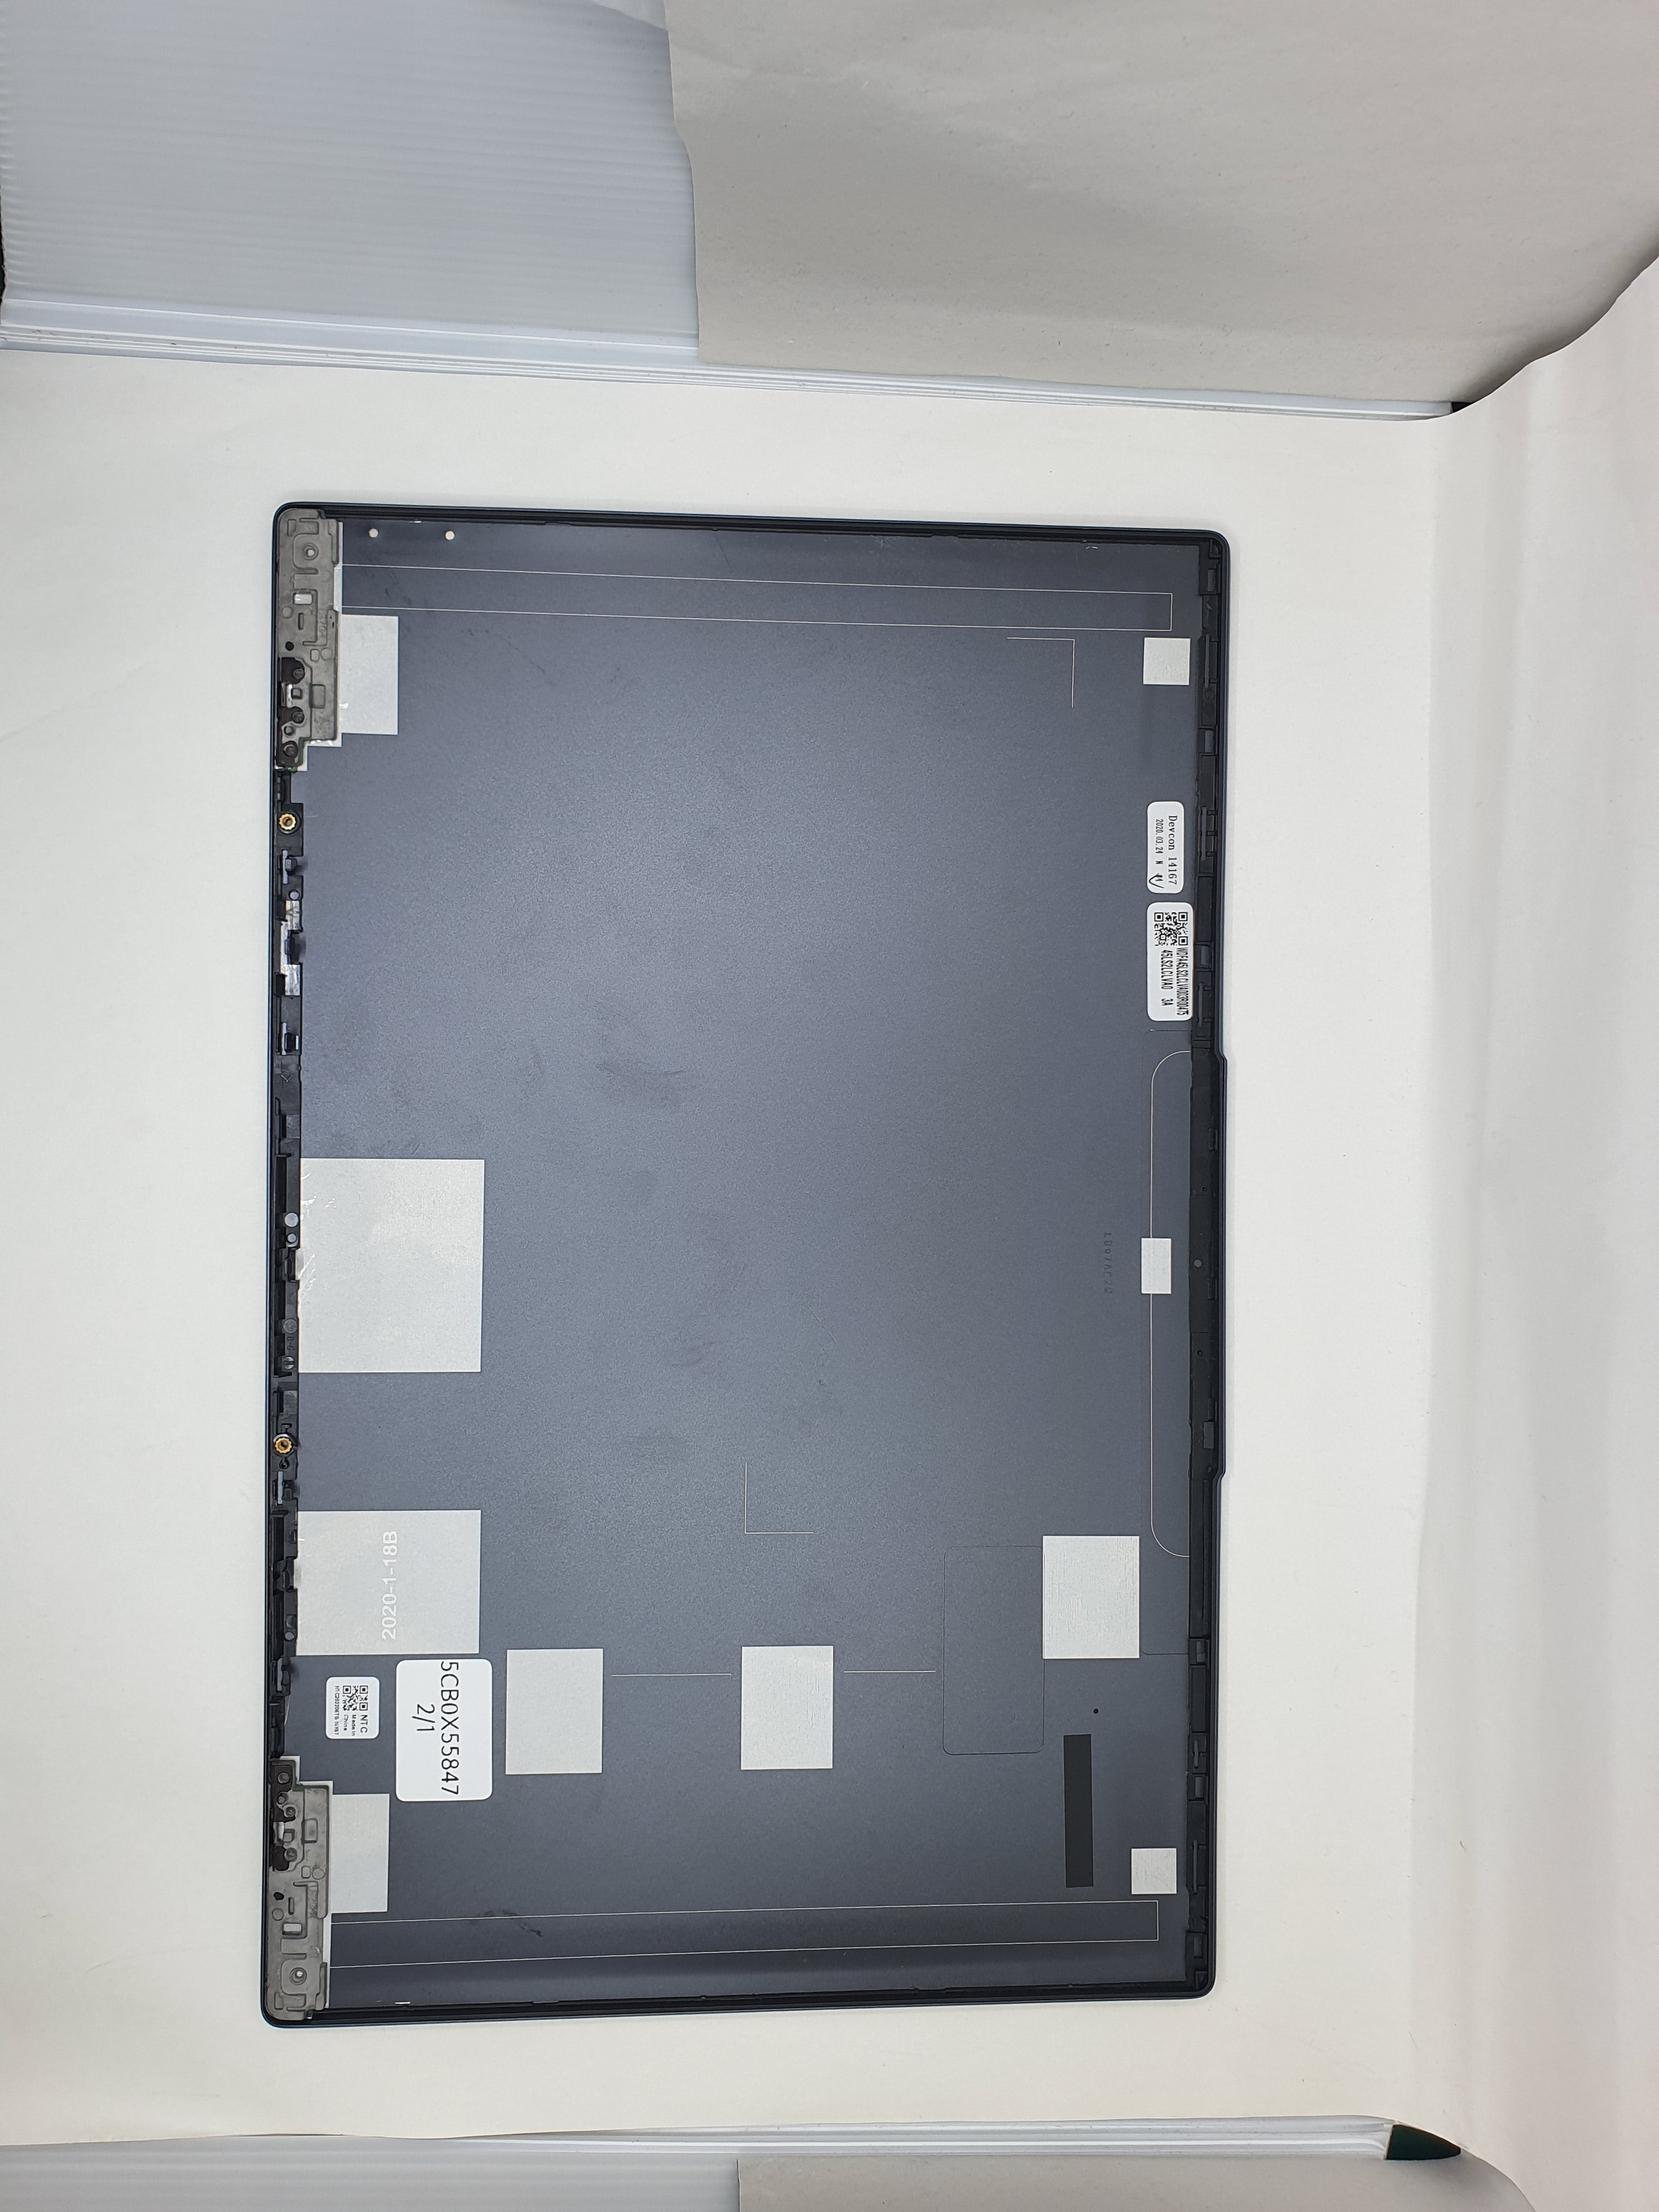 Lenovo LCD Cover Yoga Slim 7-14ITL05 WL for Replacement - Yoga Slim 7-14ITL05